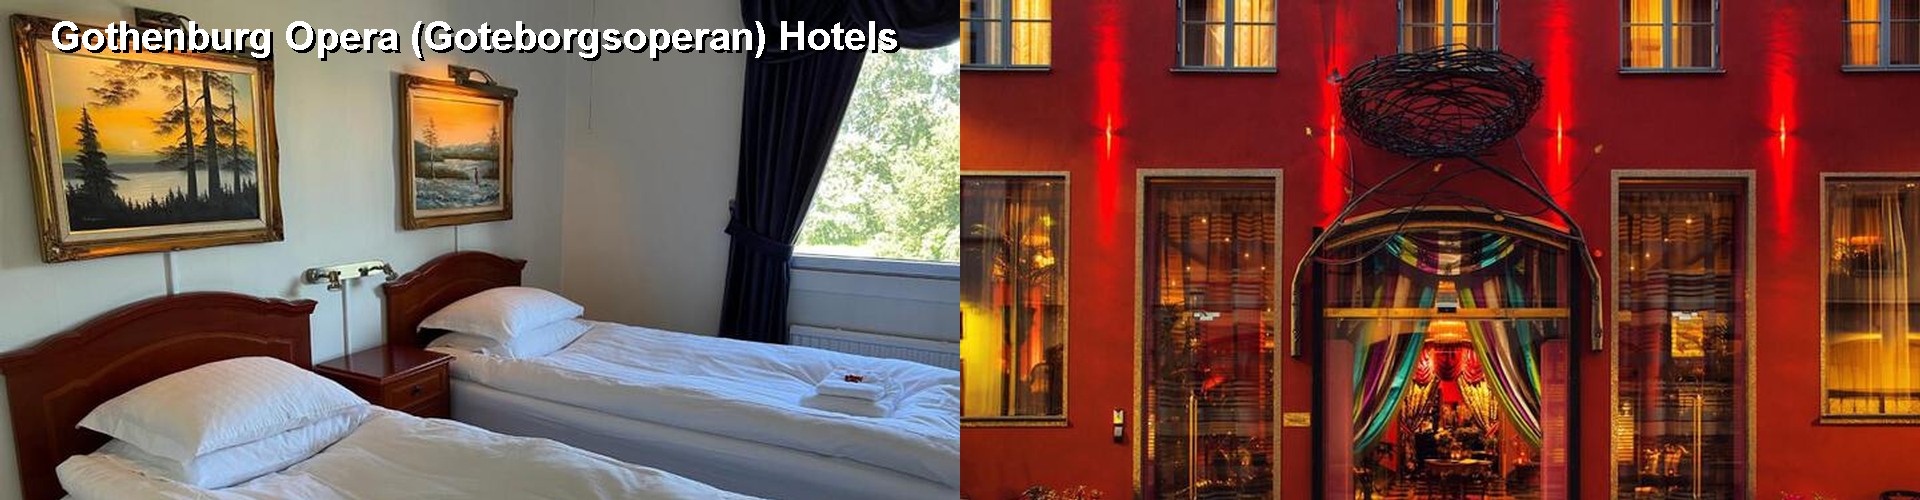 5 Best Hotels near Gothenburg Opera (Goteborgsoperan)